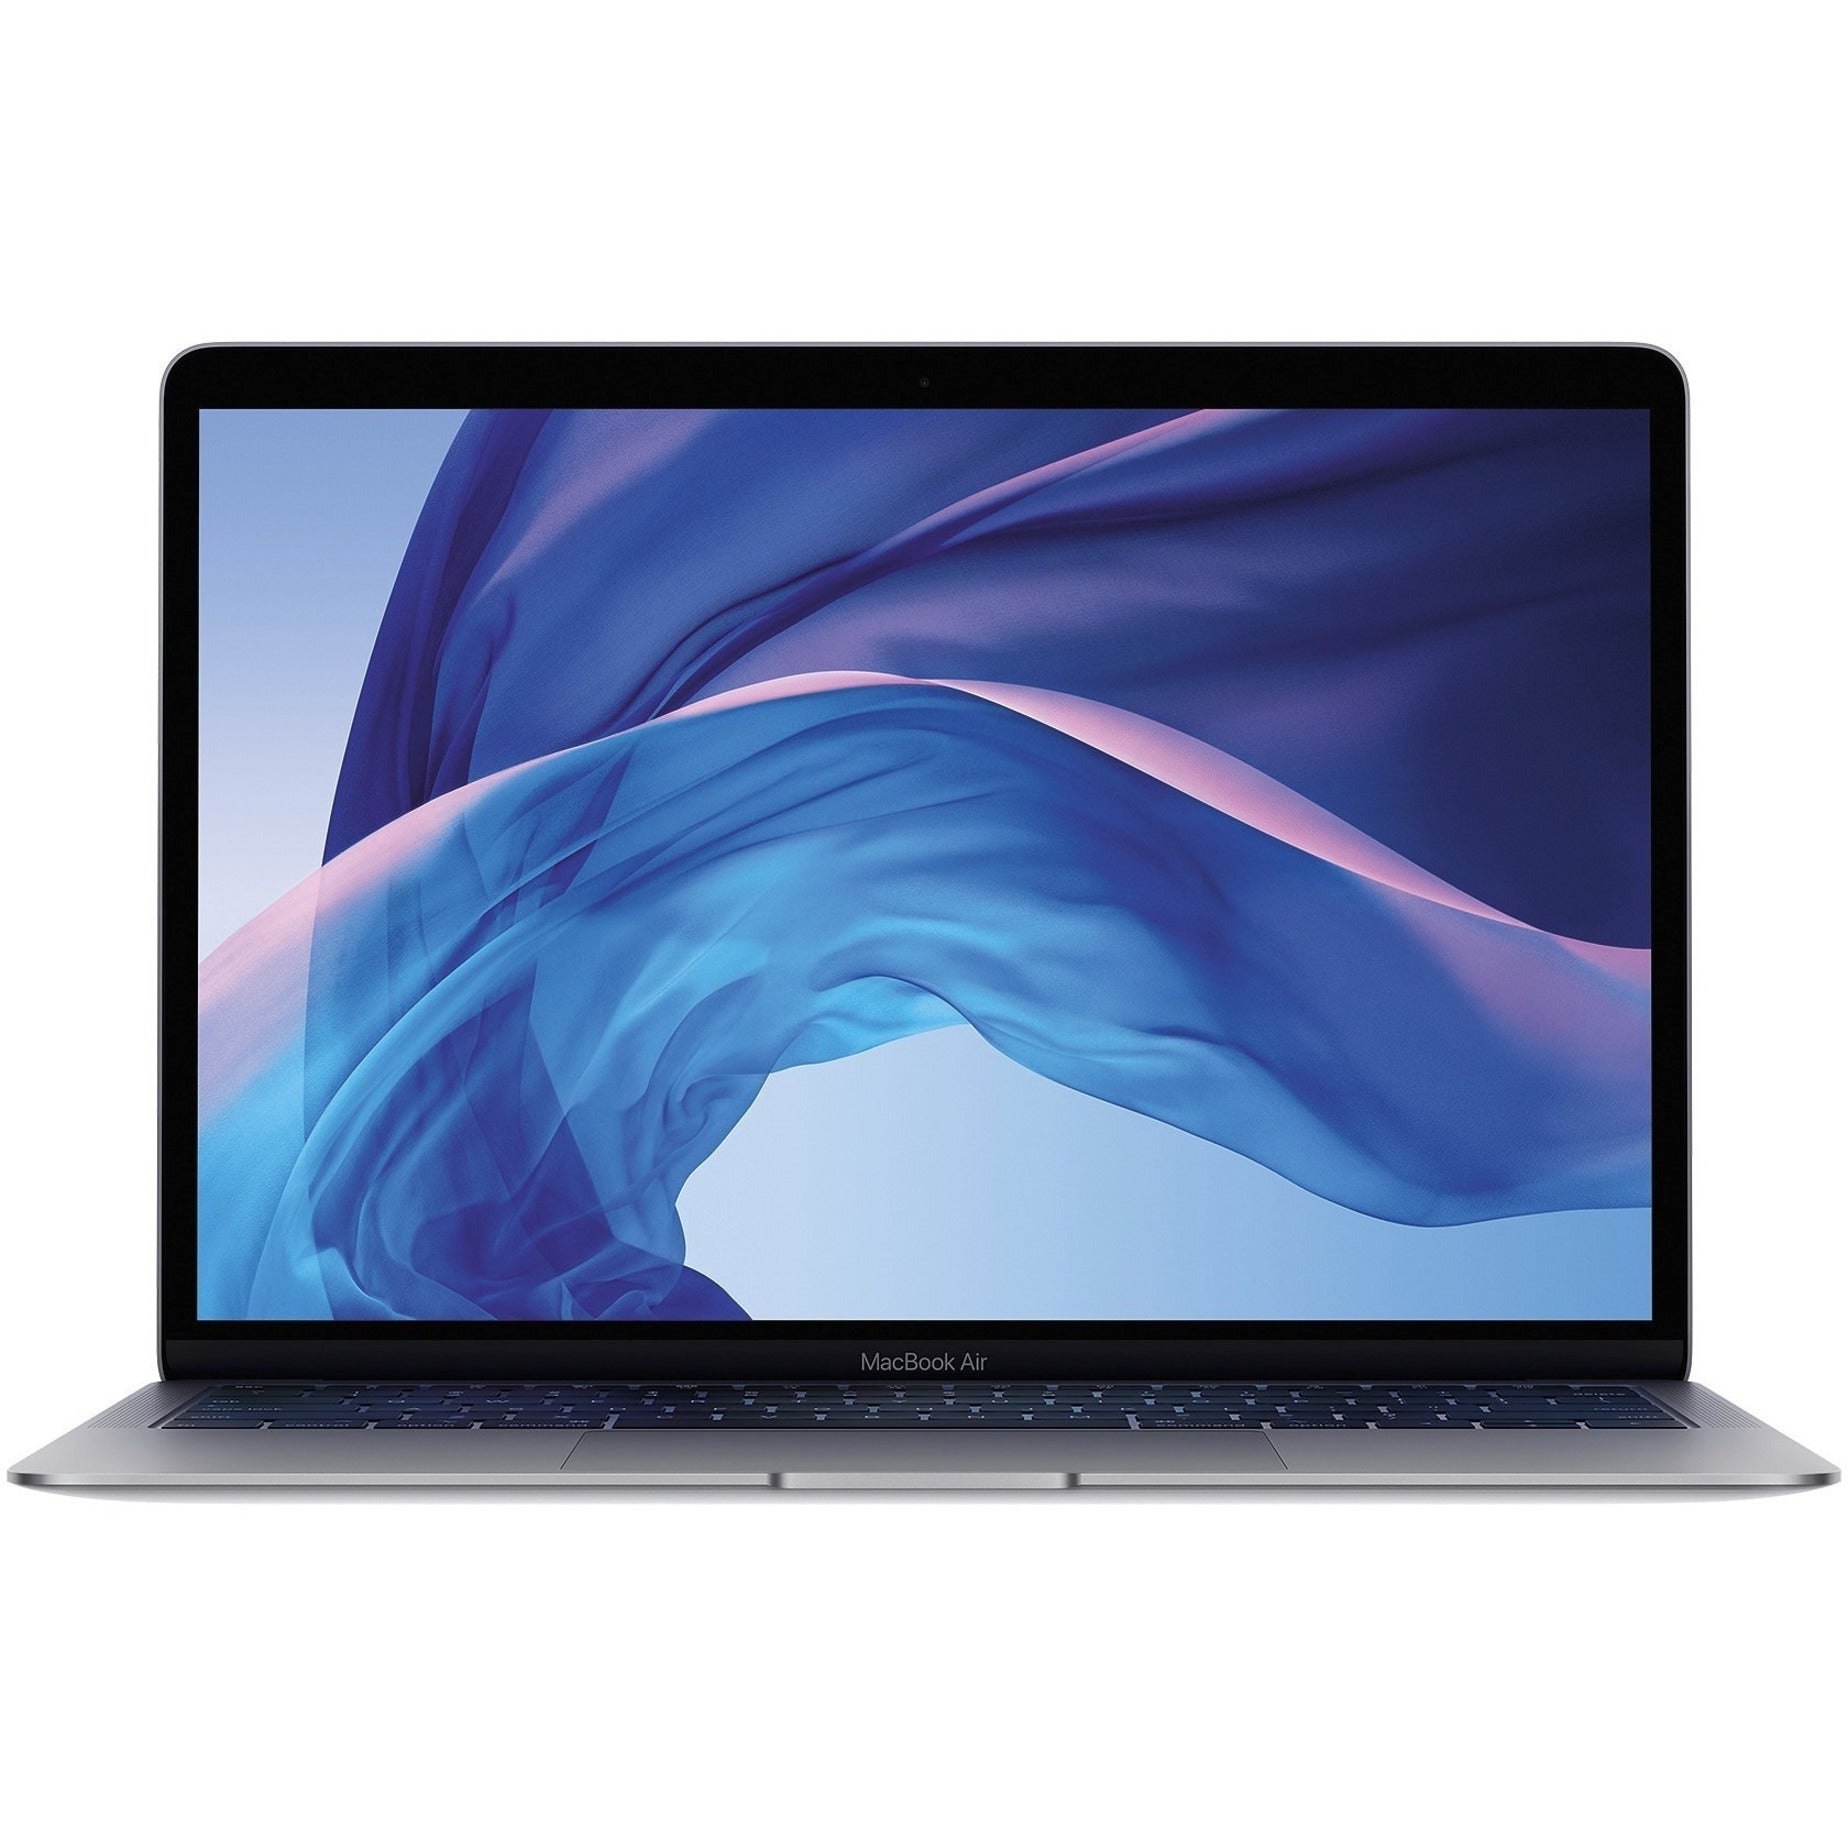 Apple MVFH2LL/A MacBook Air 133-Zoll-Notebook Intel Core i5 8GB RAM 128GB SSD macOS Mojave